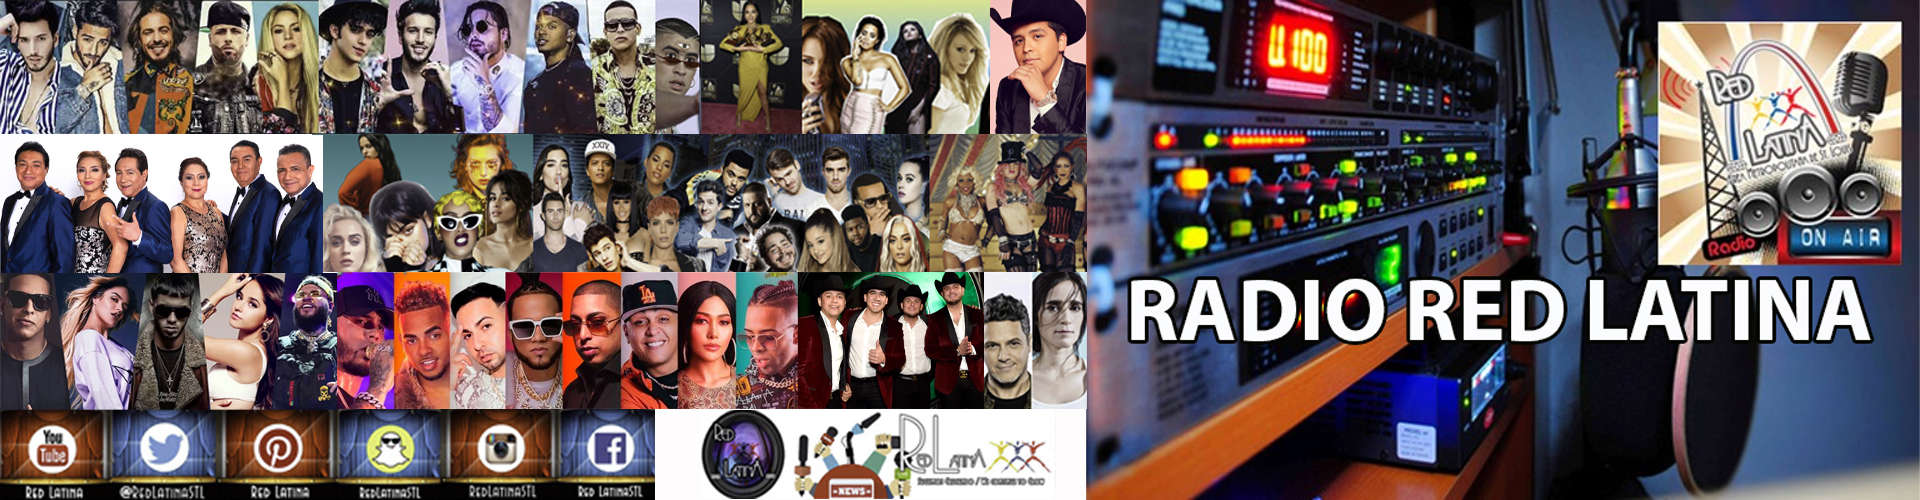 Radio red latina